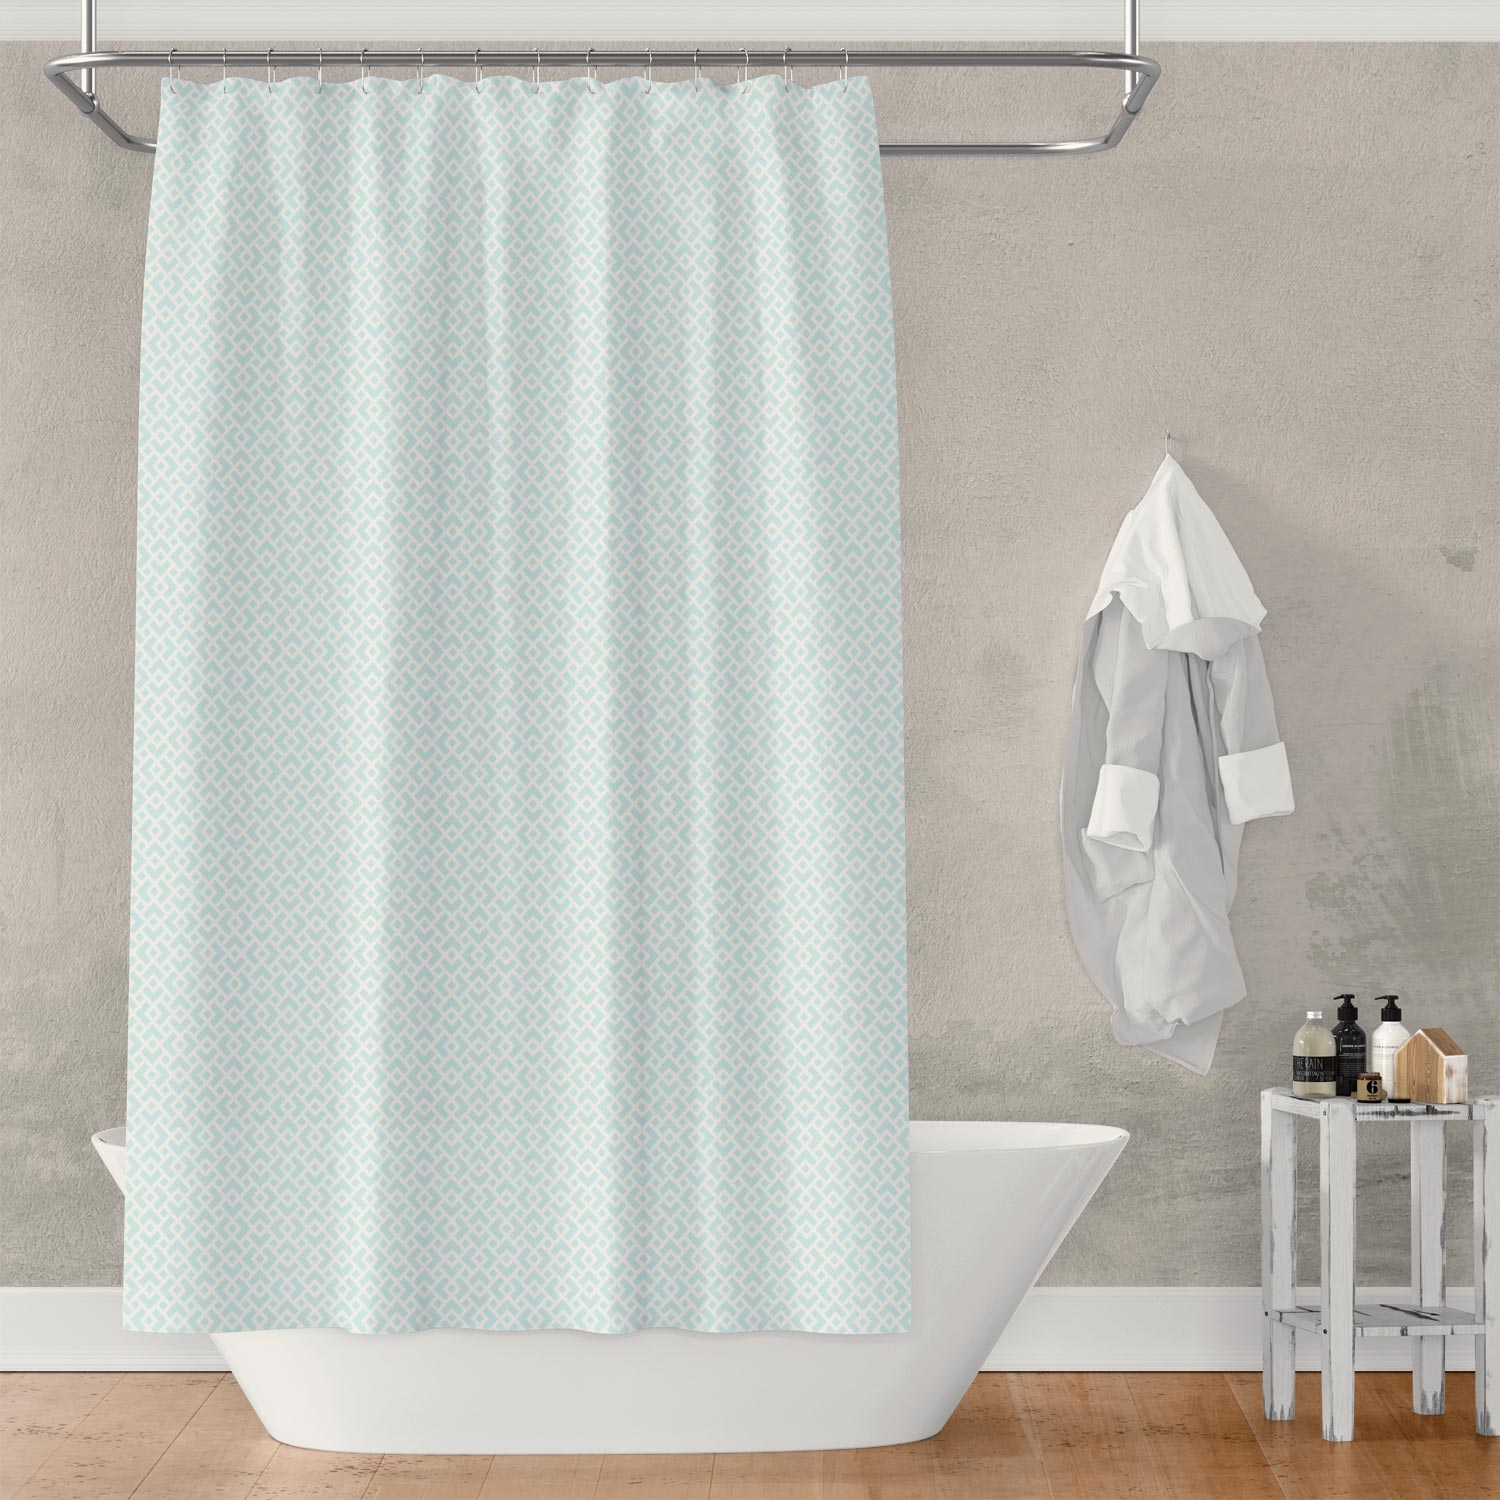 Blue & White Diamond Lattice Shower Curtain